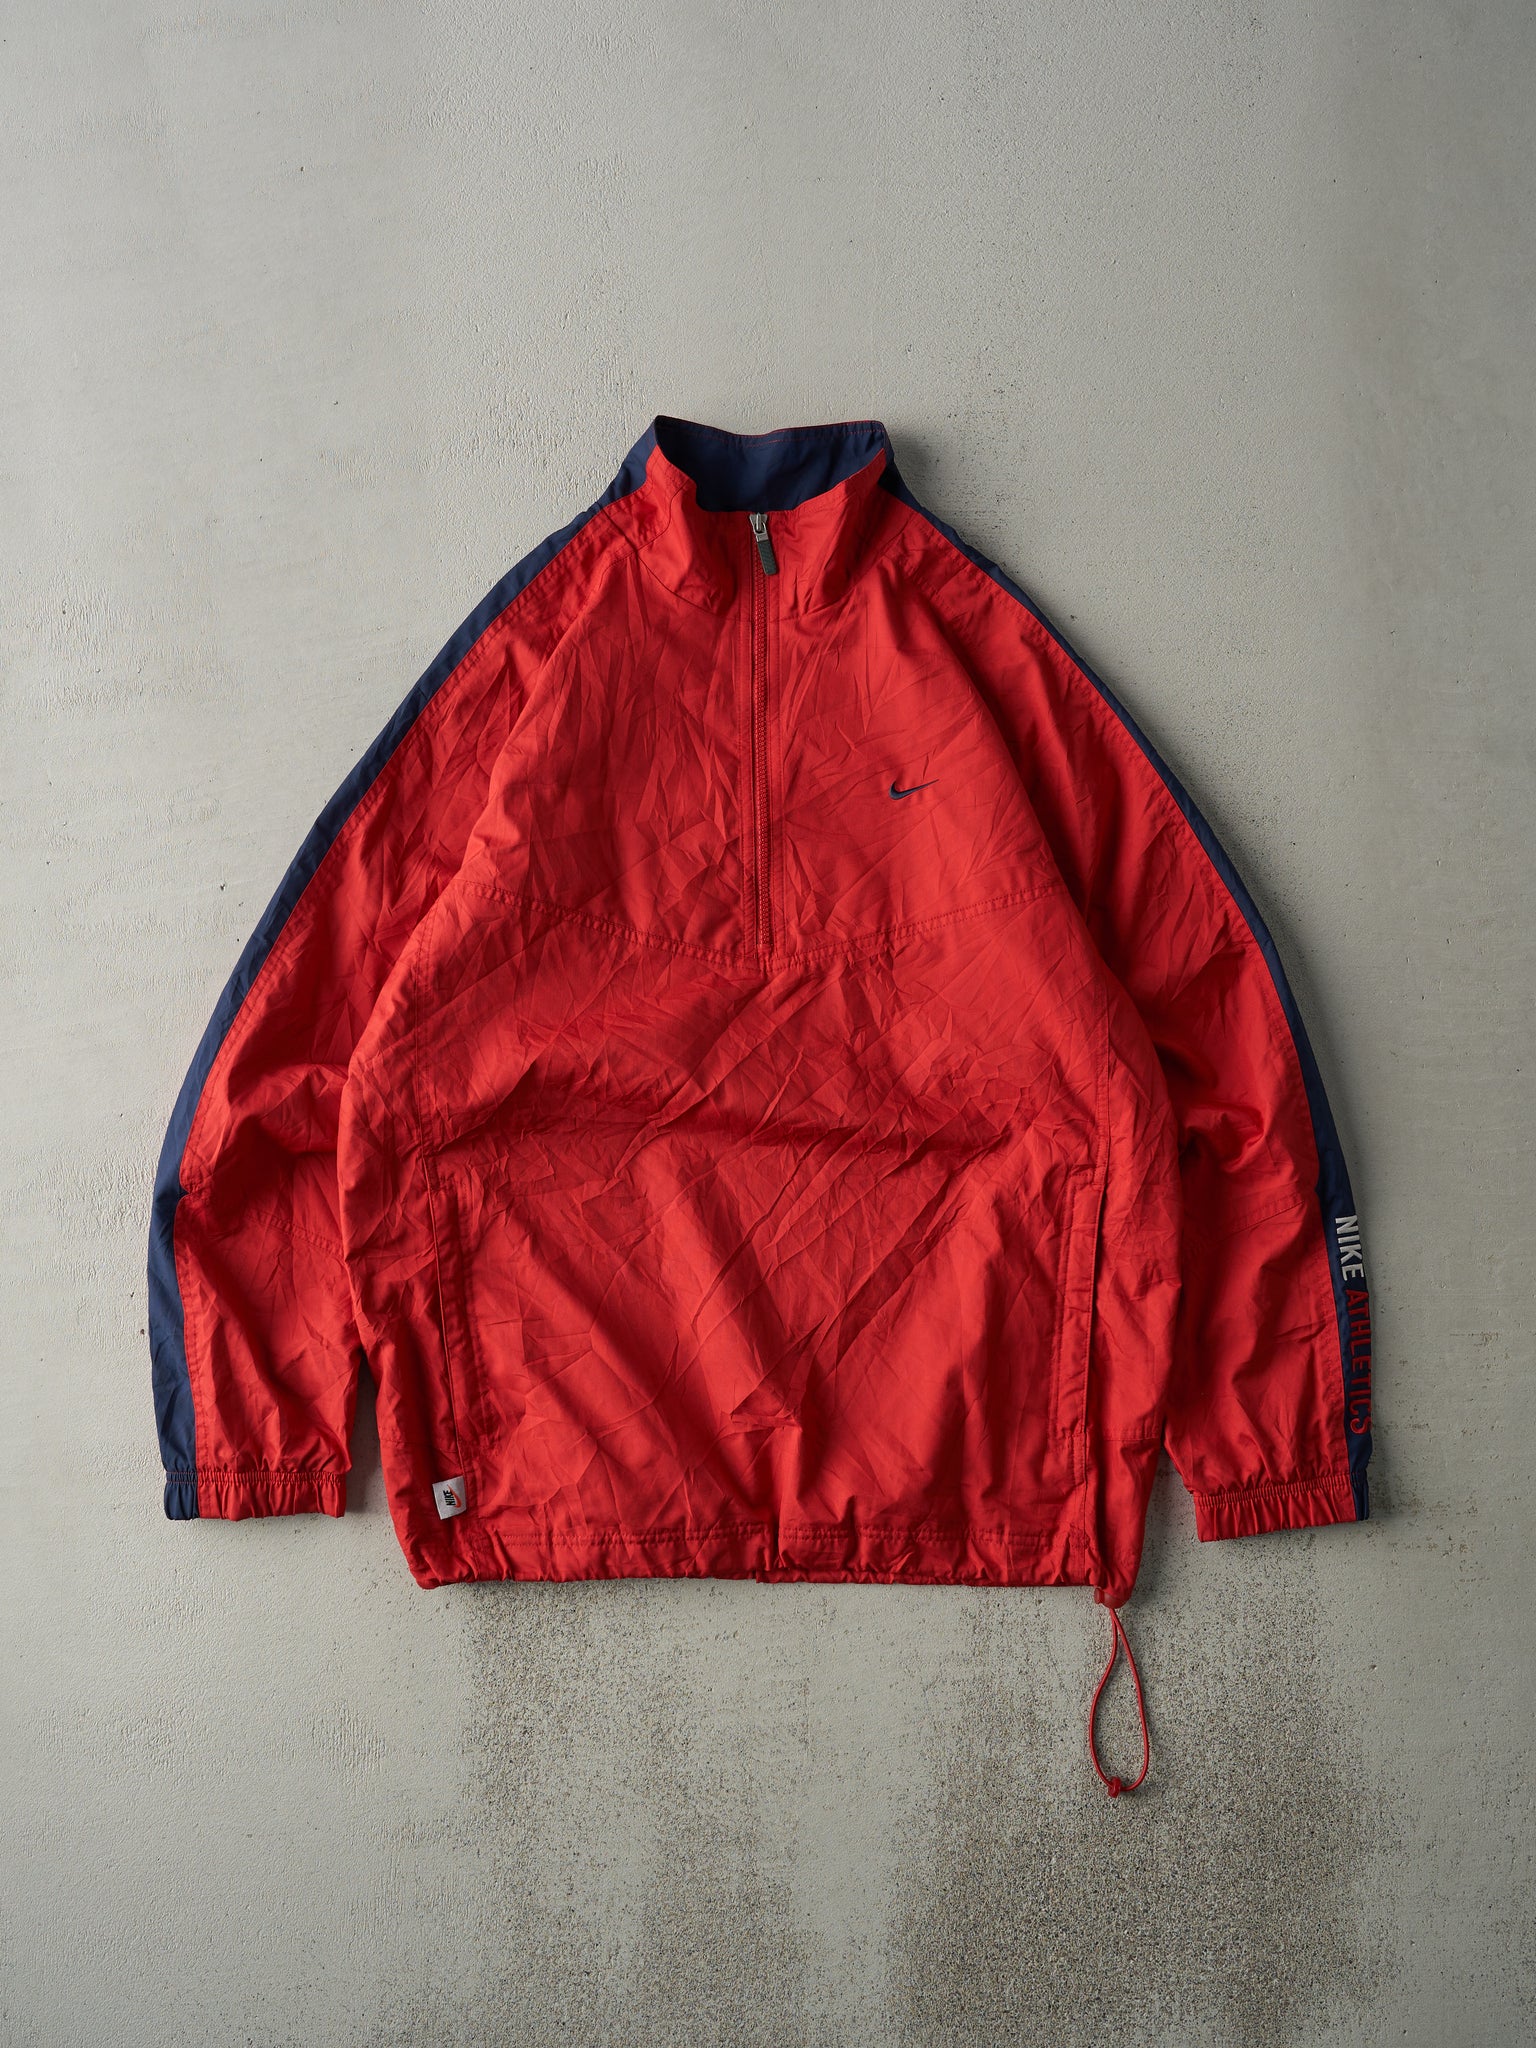 Vintage 90s Red and Navy Nike Swoosh Quarter Zip Windbreaker Jacket (M/L)